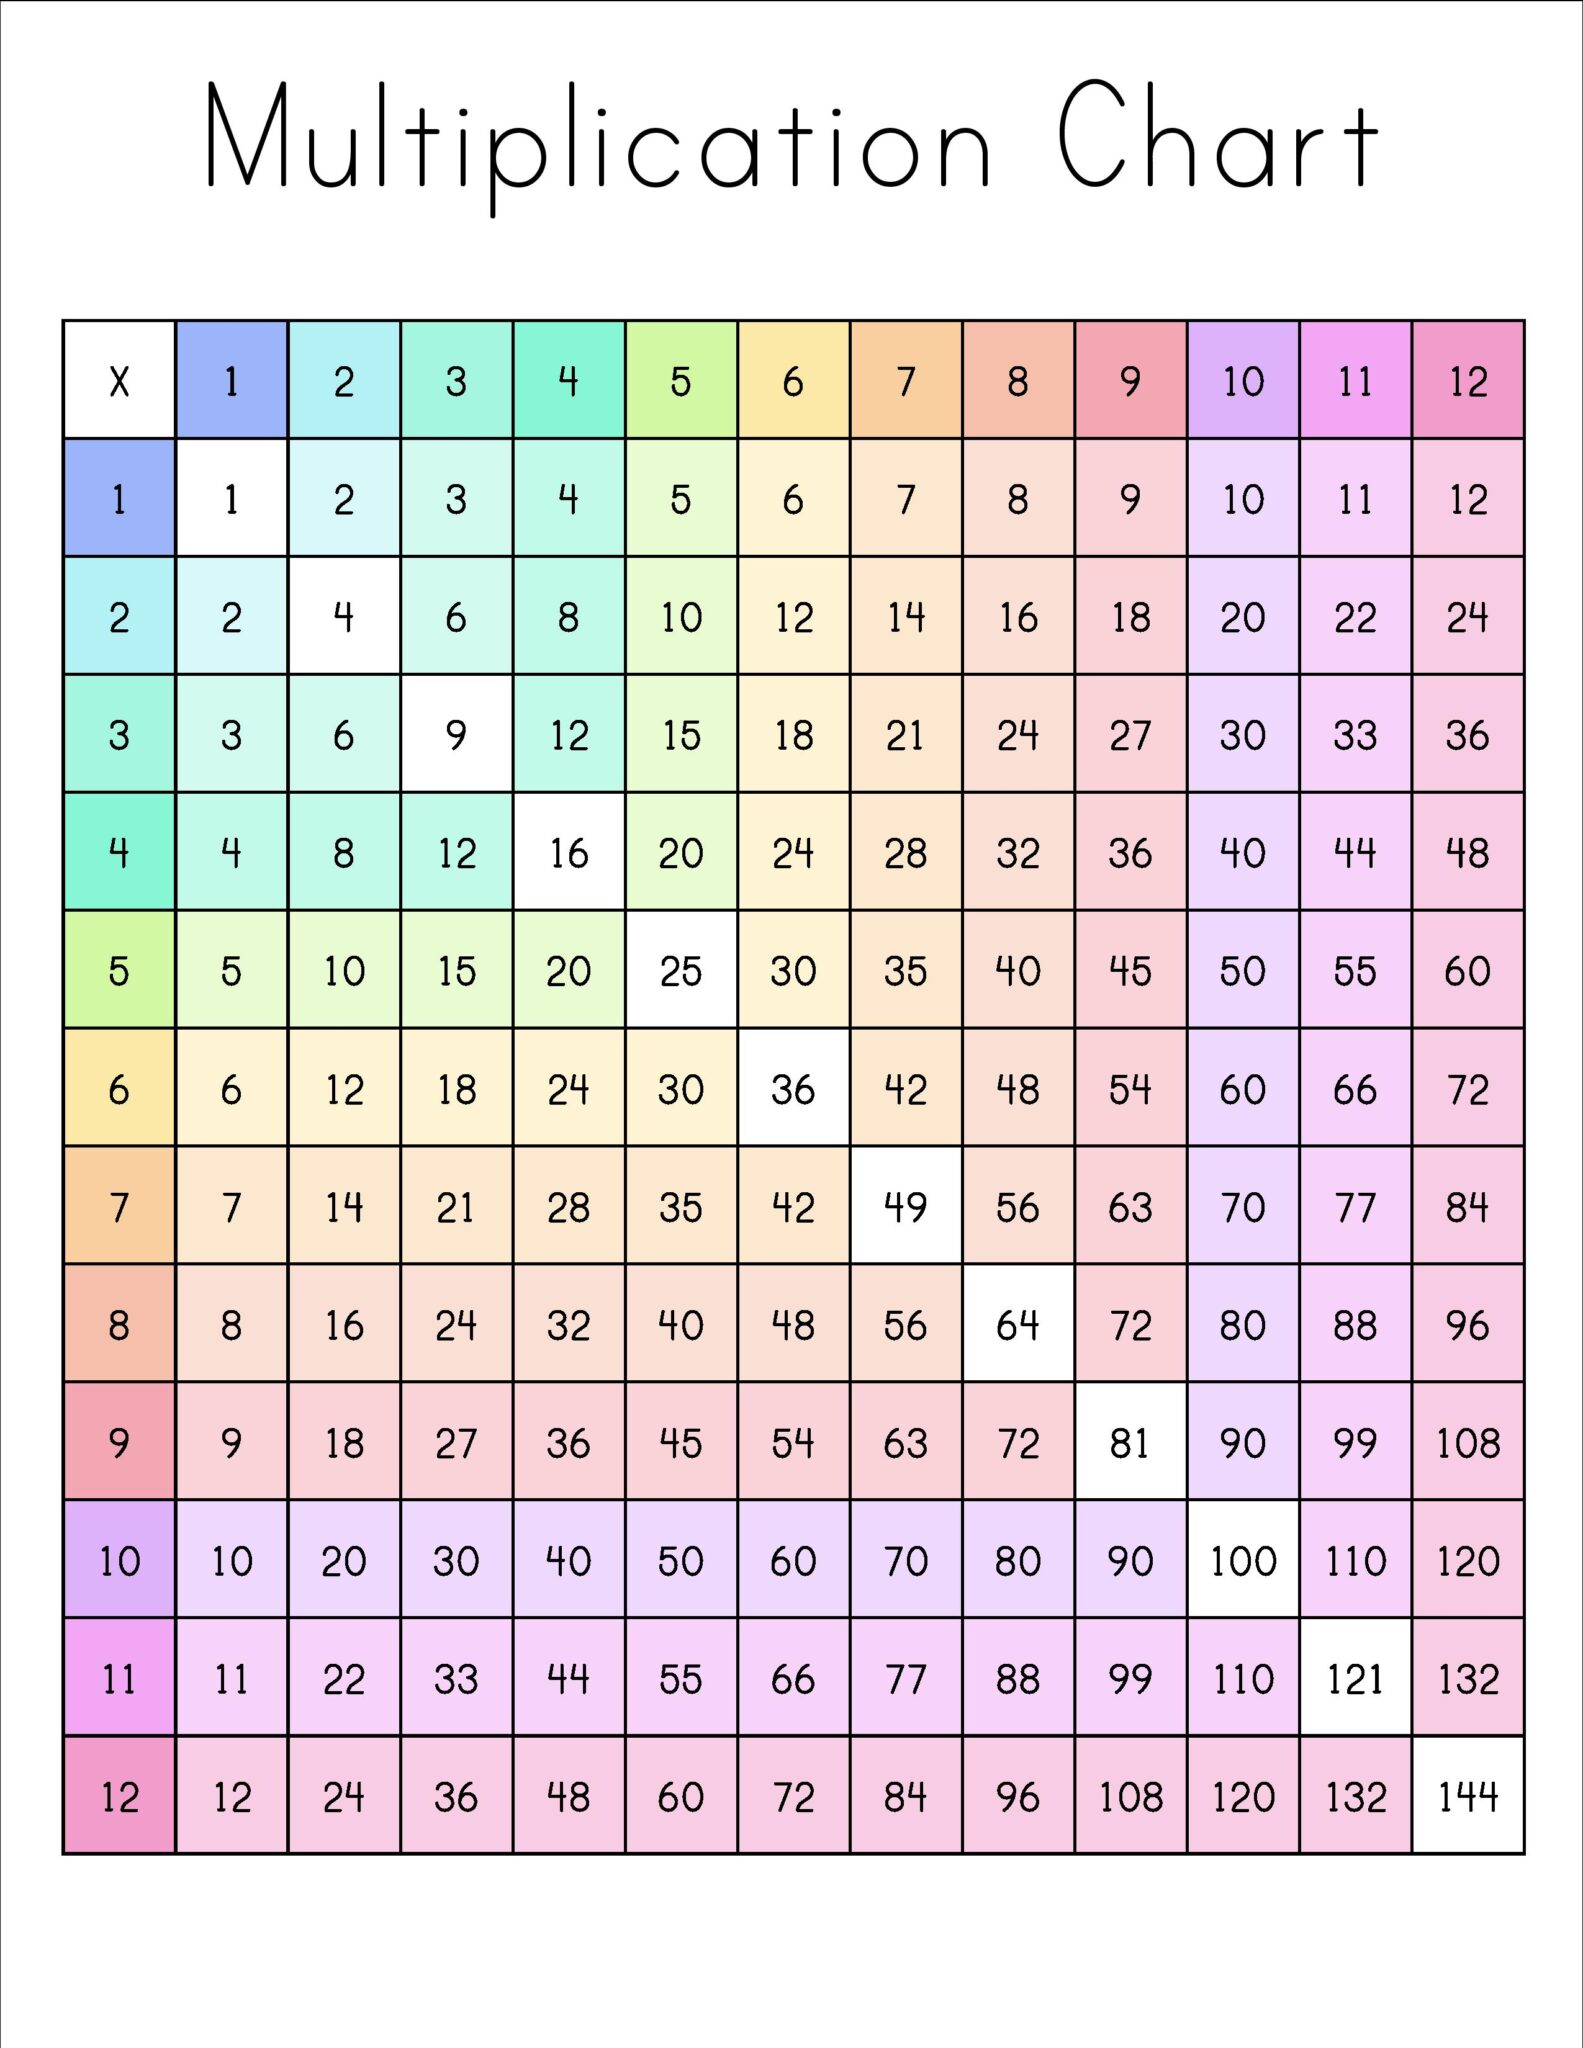 Free Multiplication Chart Printable - Pretty Sweet Printables